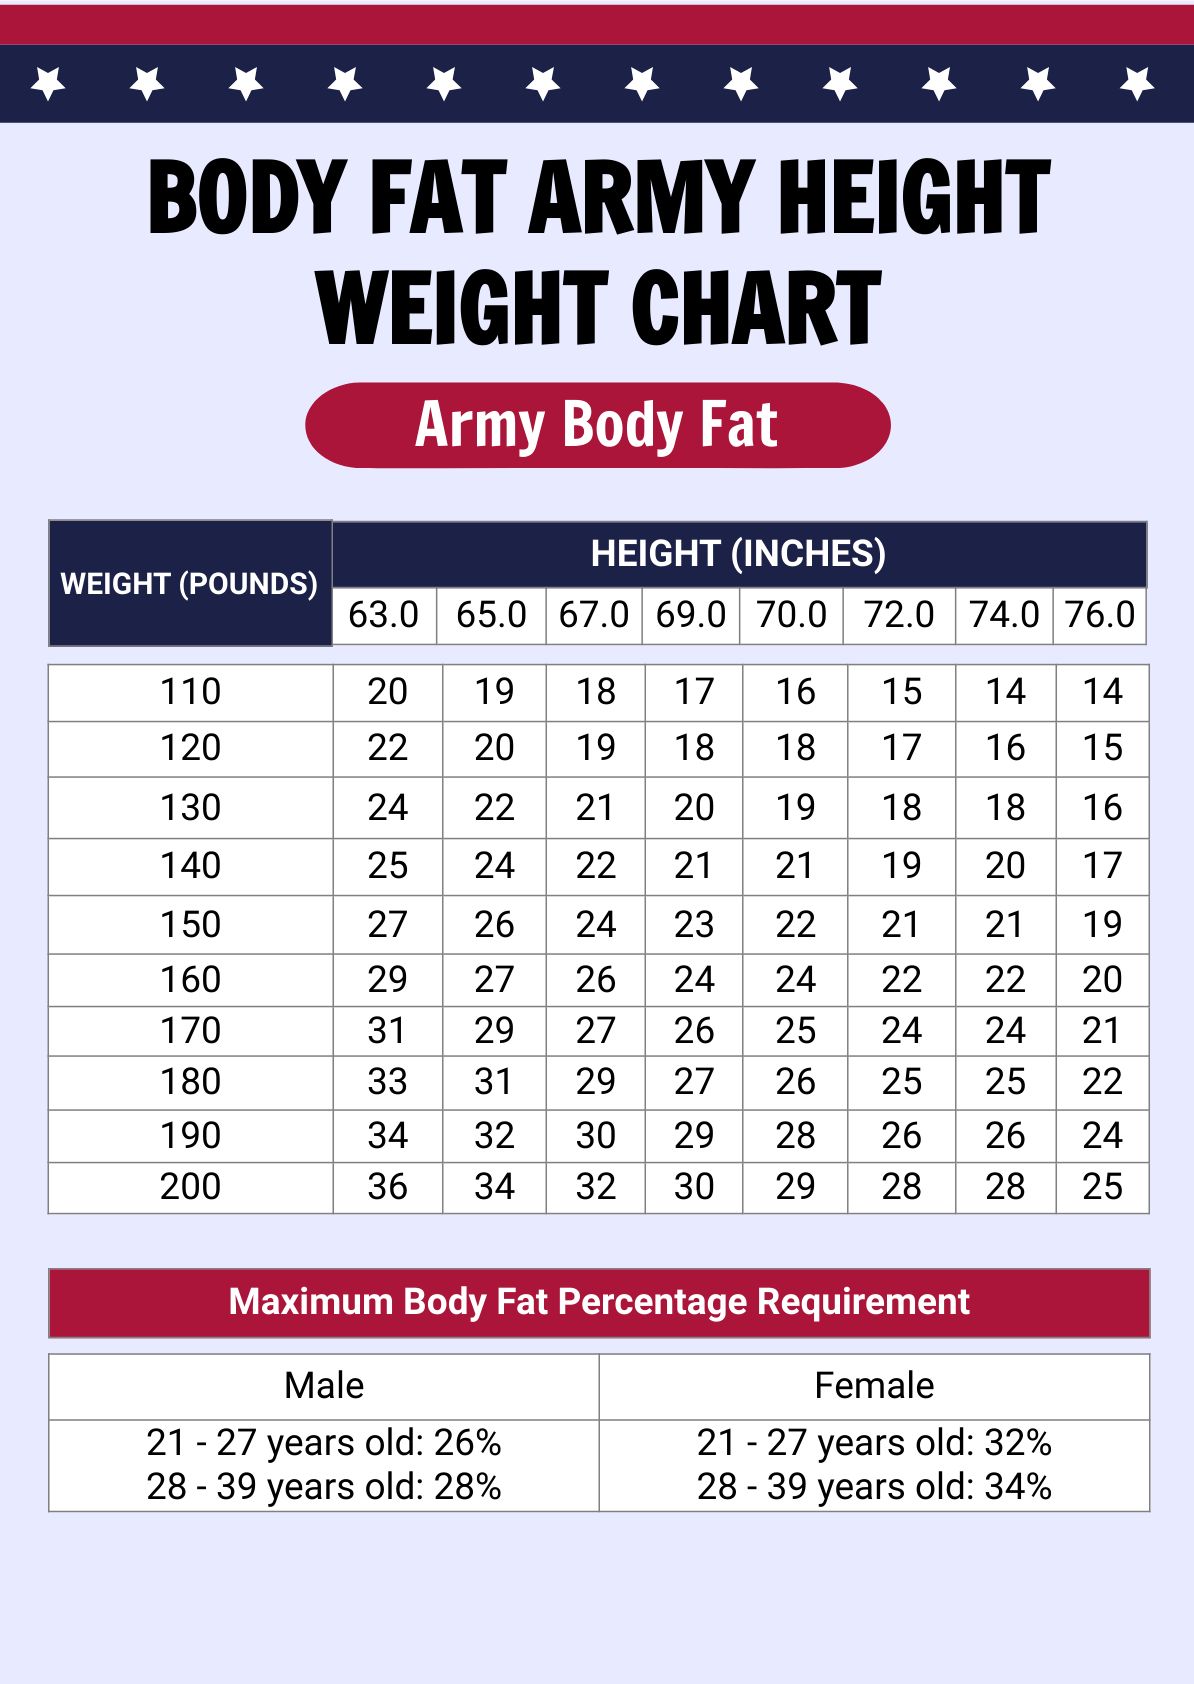 Body Fat Army Height Weight Chart Efwxx 